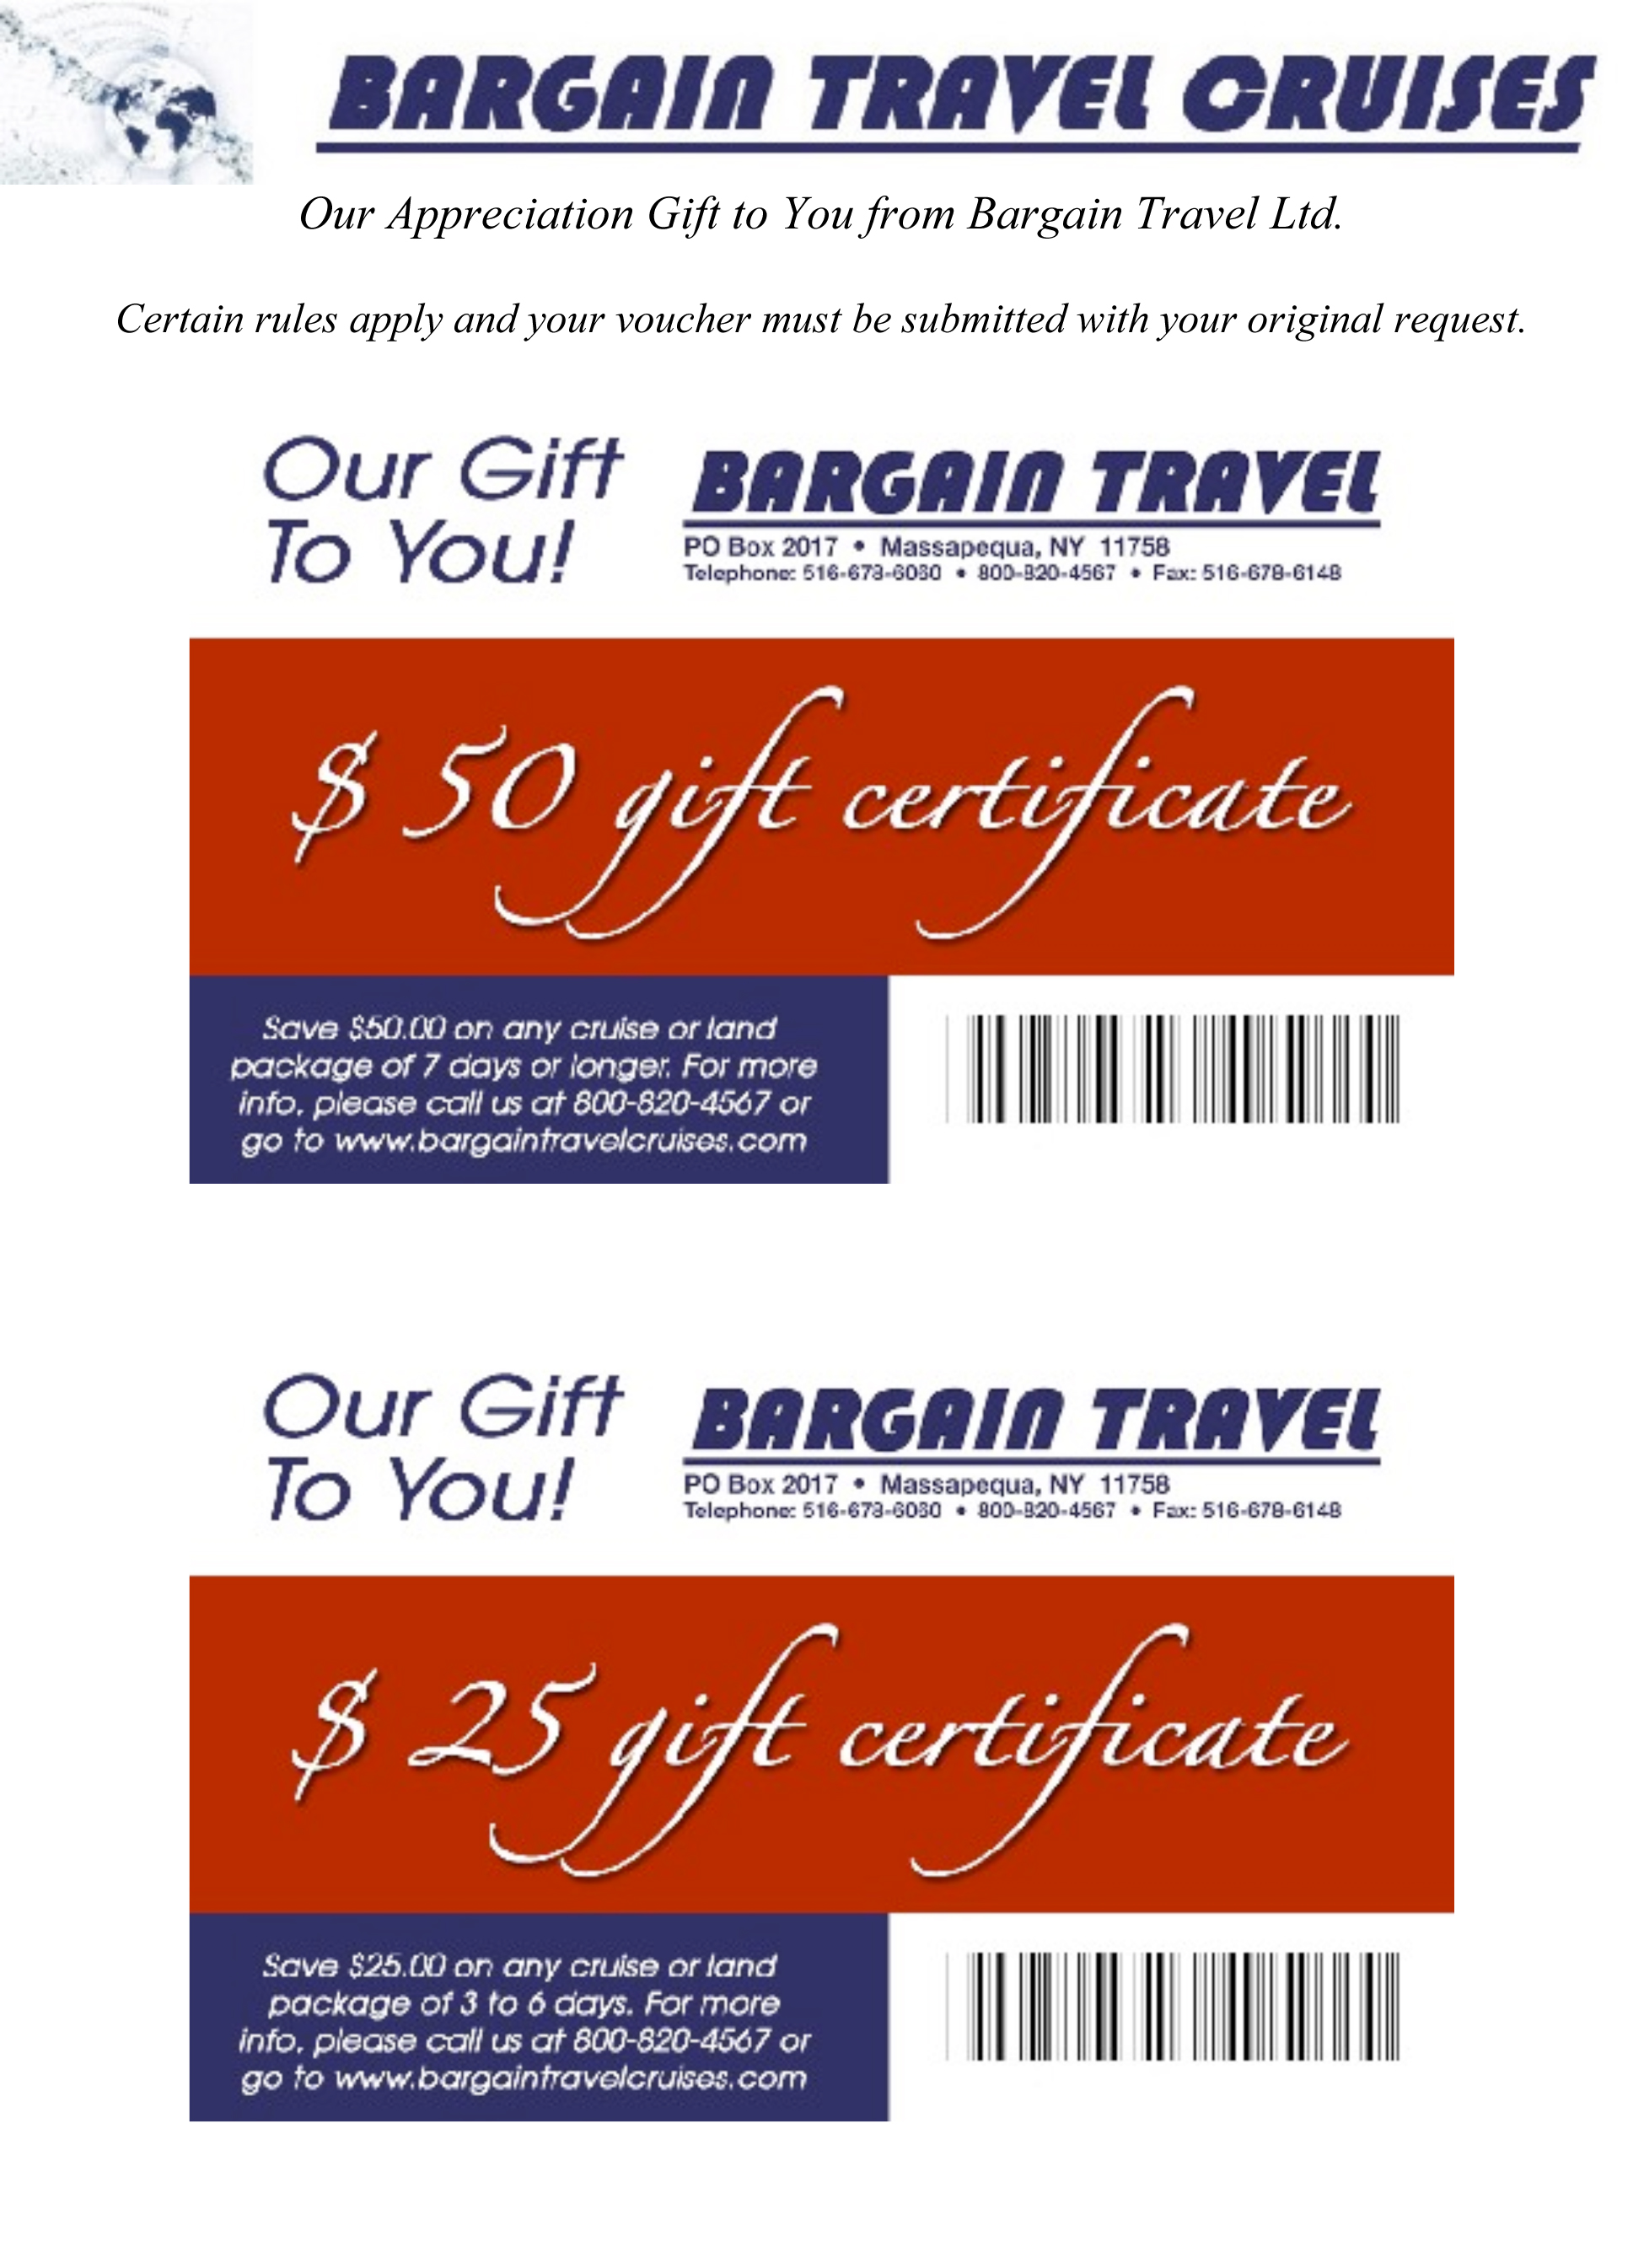 BT Gift Certificates [Dec 2012]